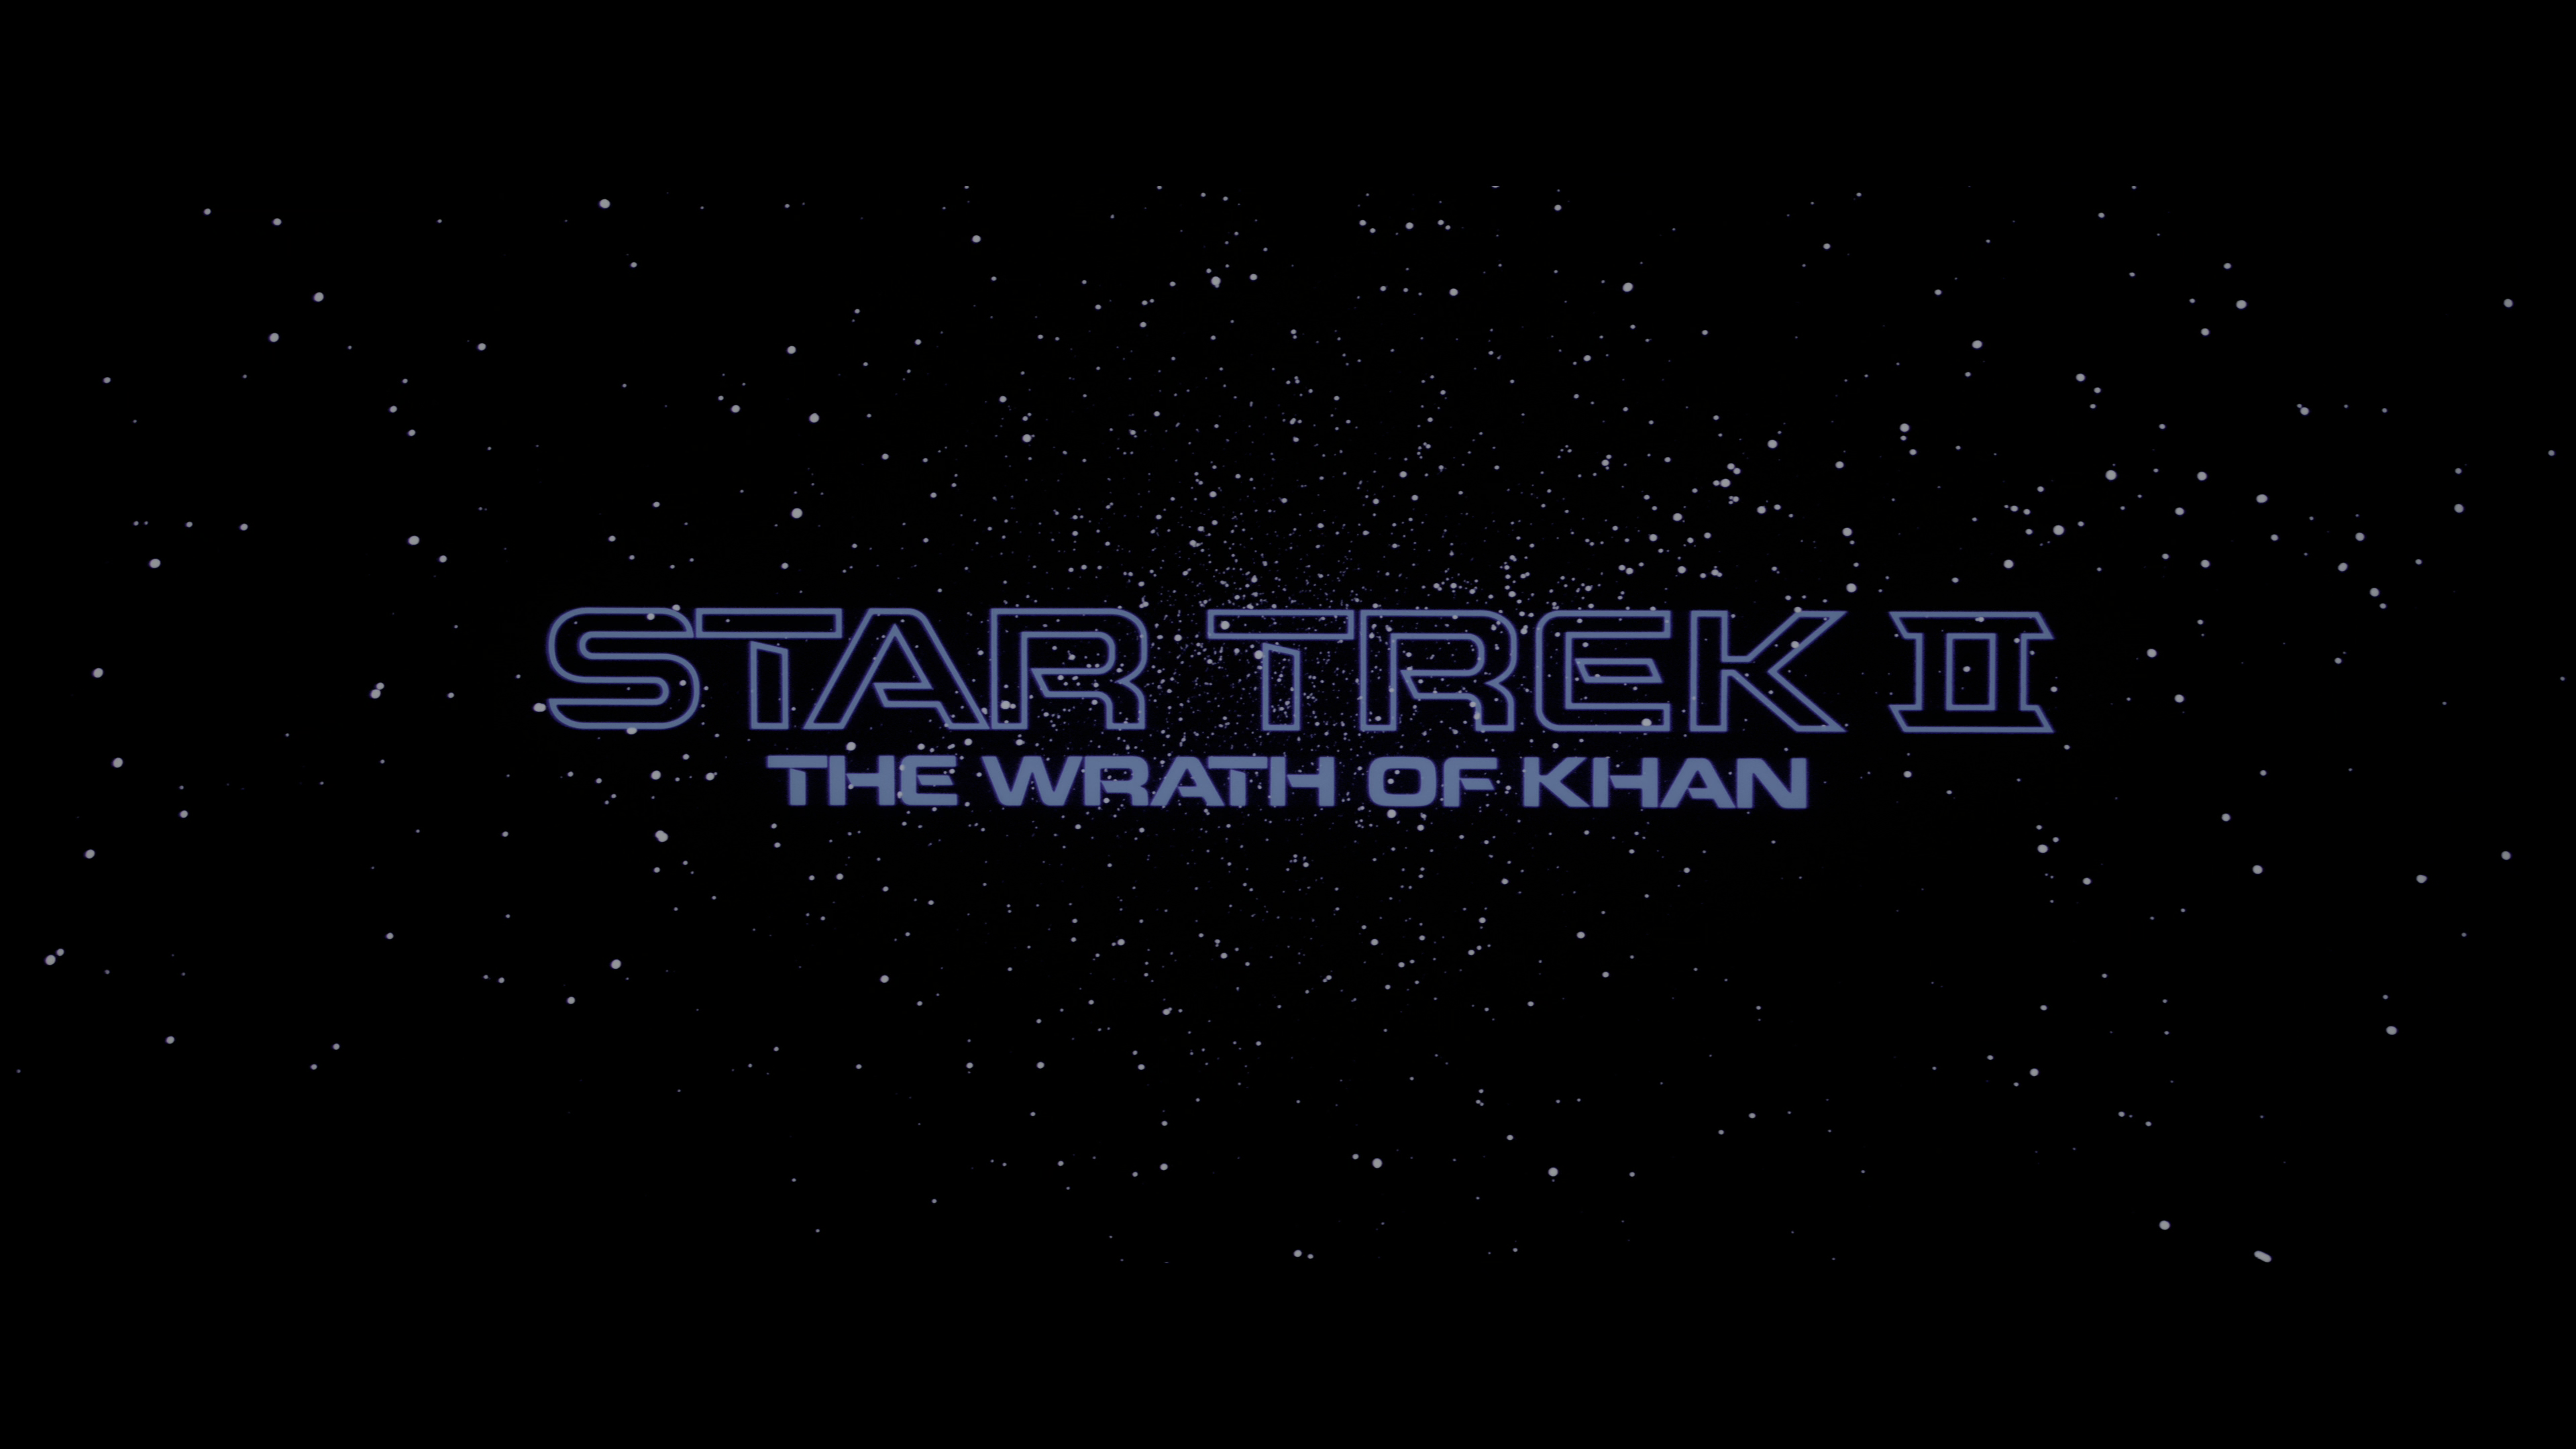 Star Trek II: The Wrath of Khan 4K UHD screencap 1